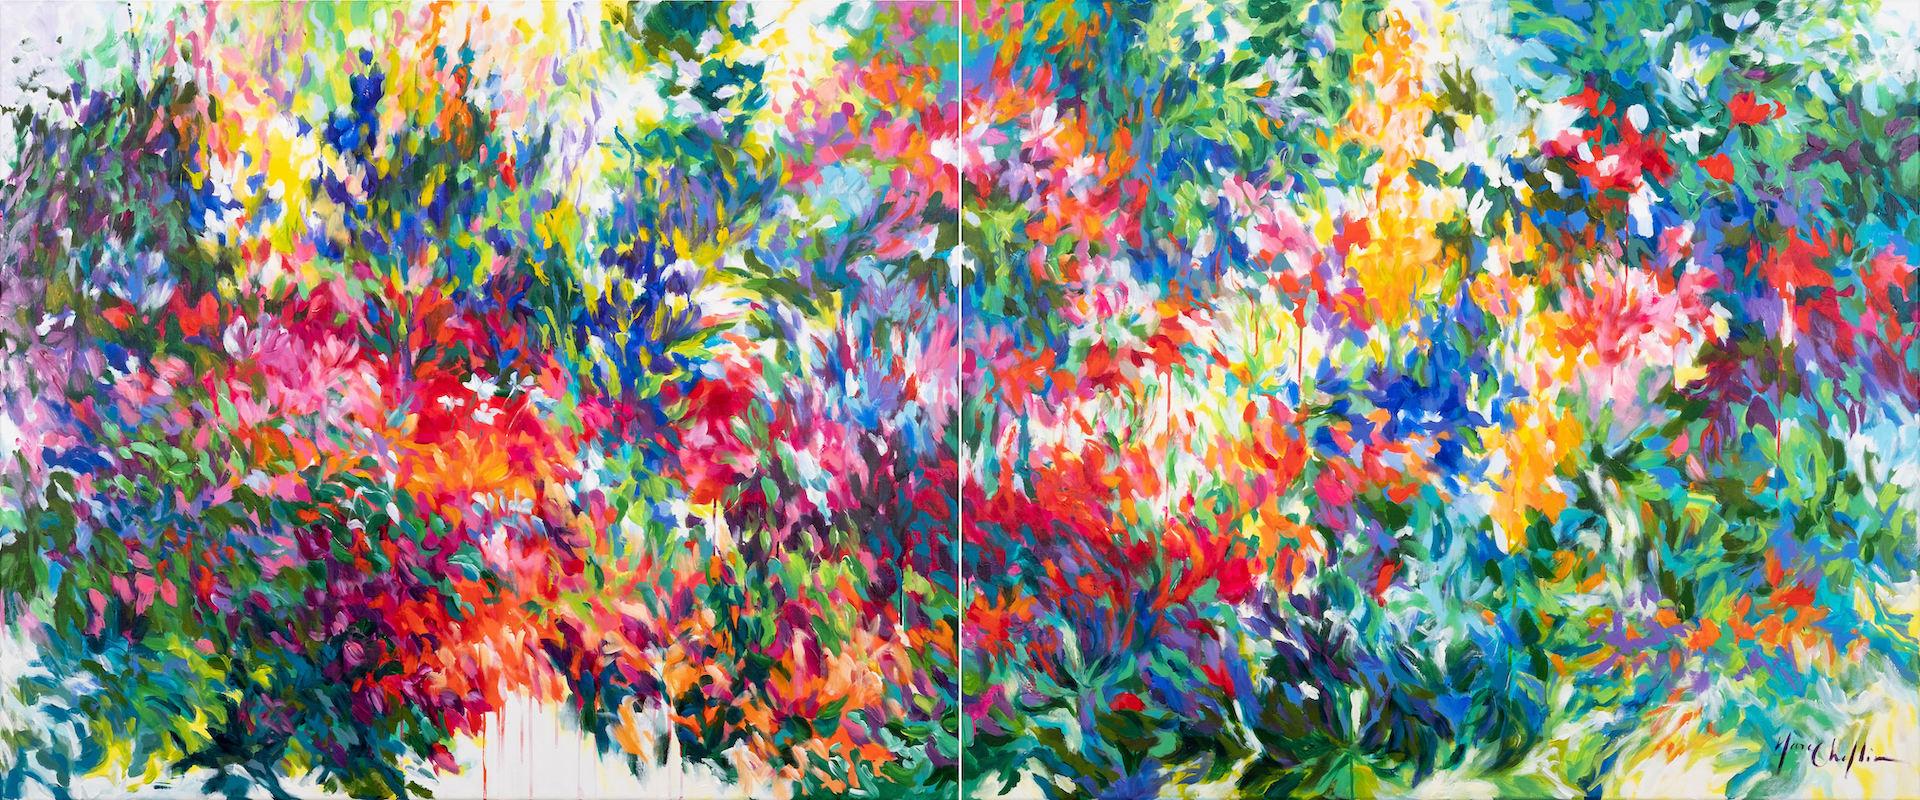 Franoises Garten von MARY CHAPLIN, helle Kunst, große Gemälde, geblümte Kunst